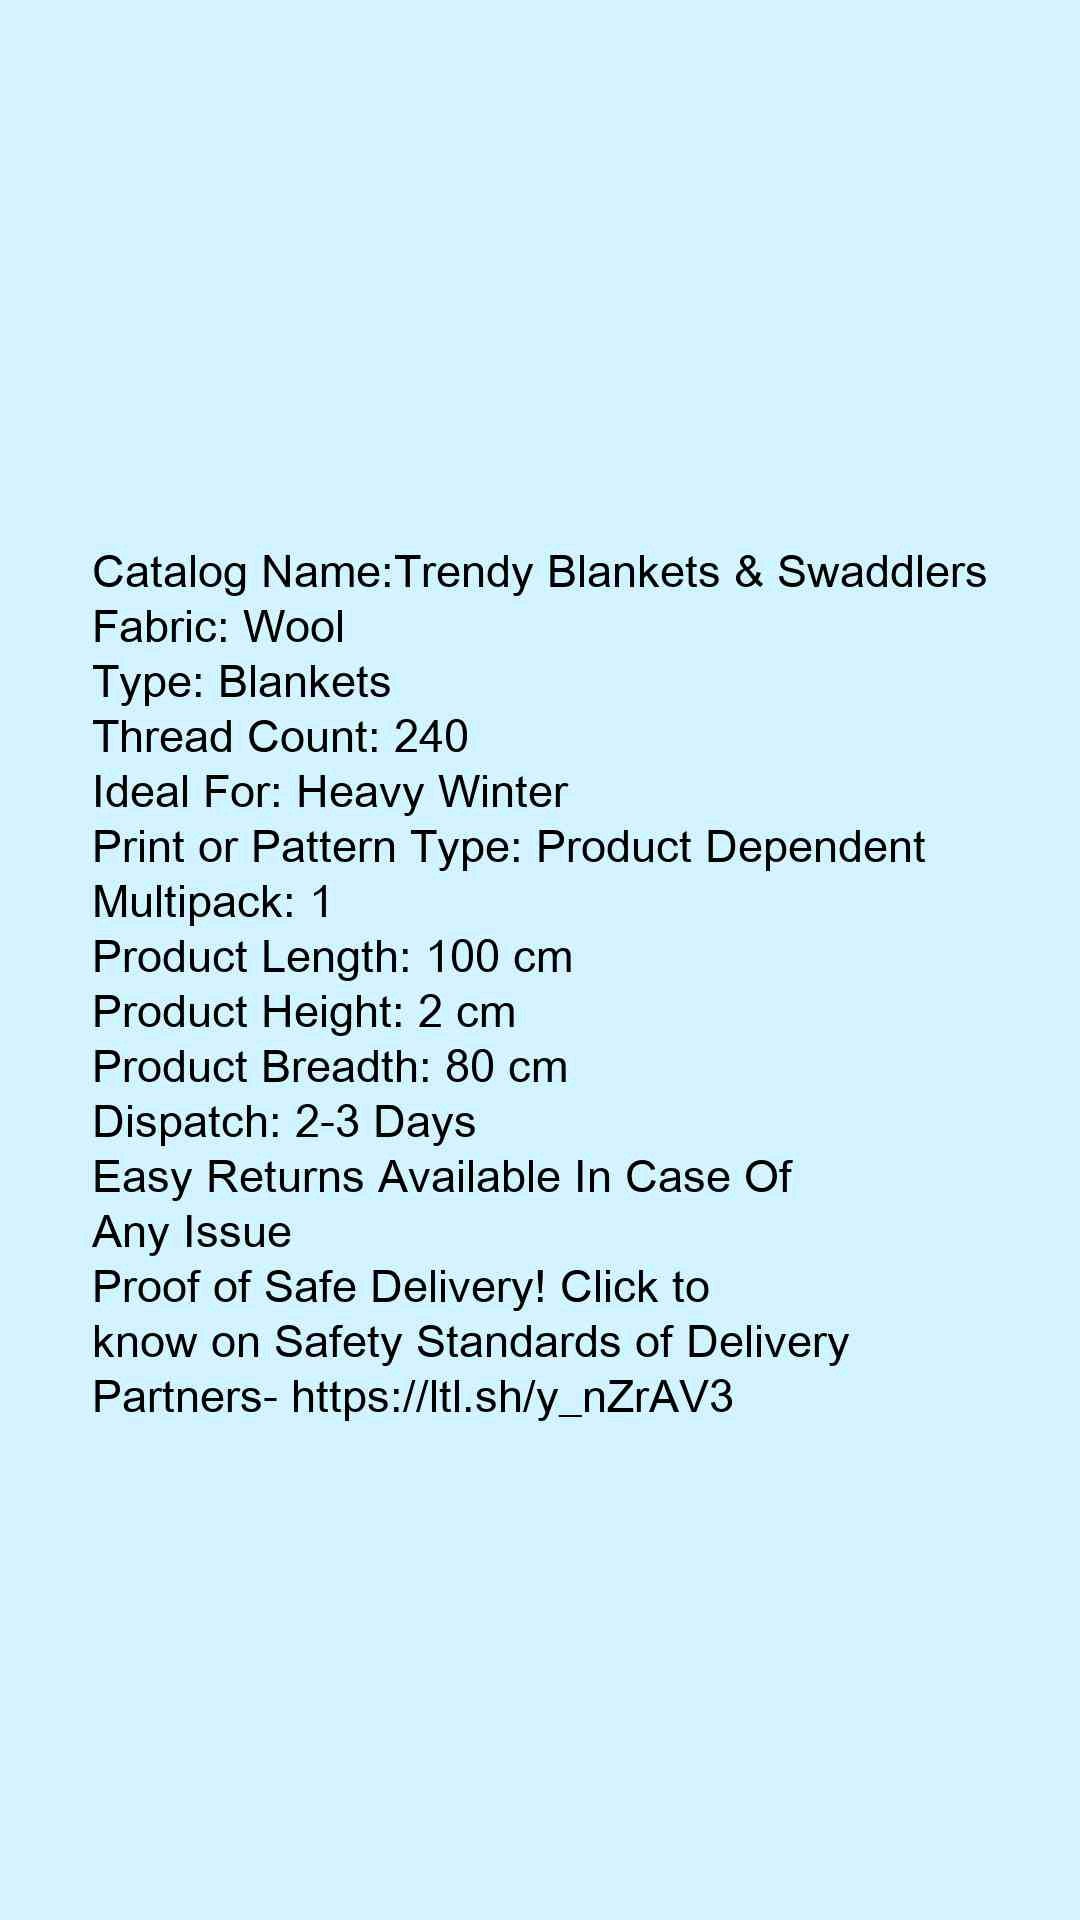 Trendy Blankets & Swaddlers - Faritha